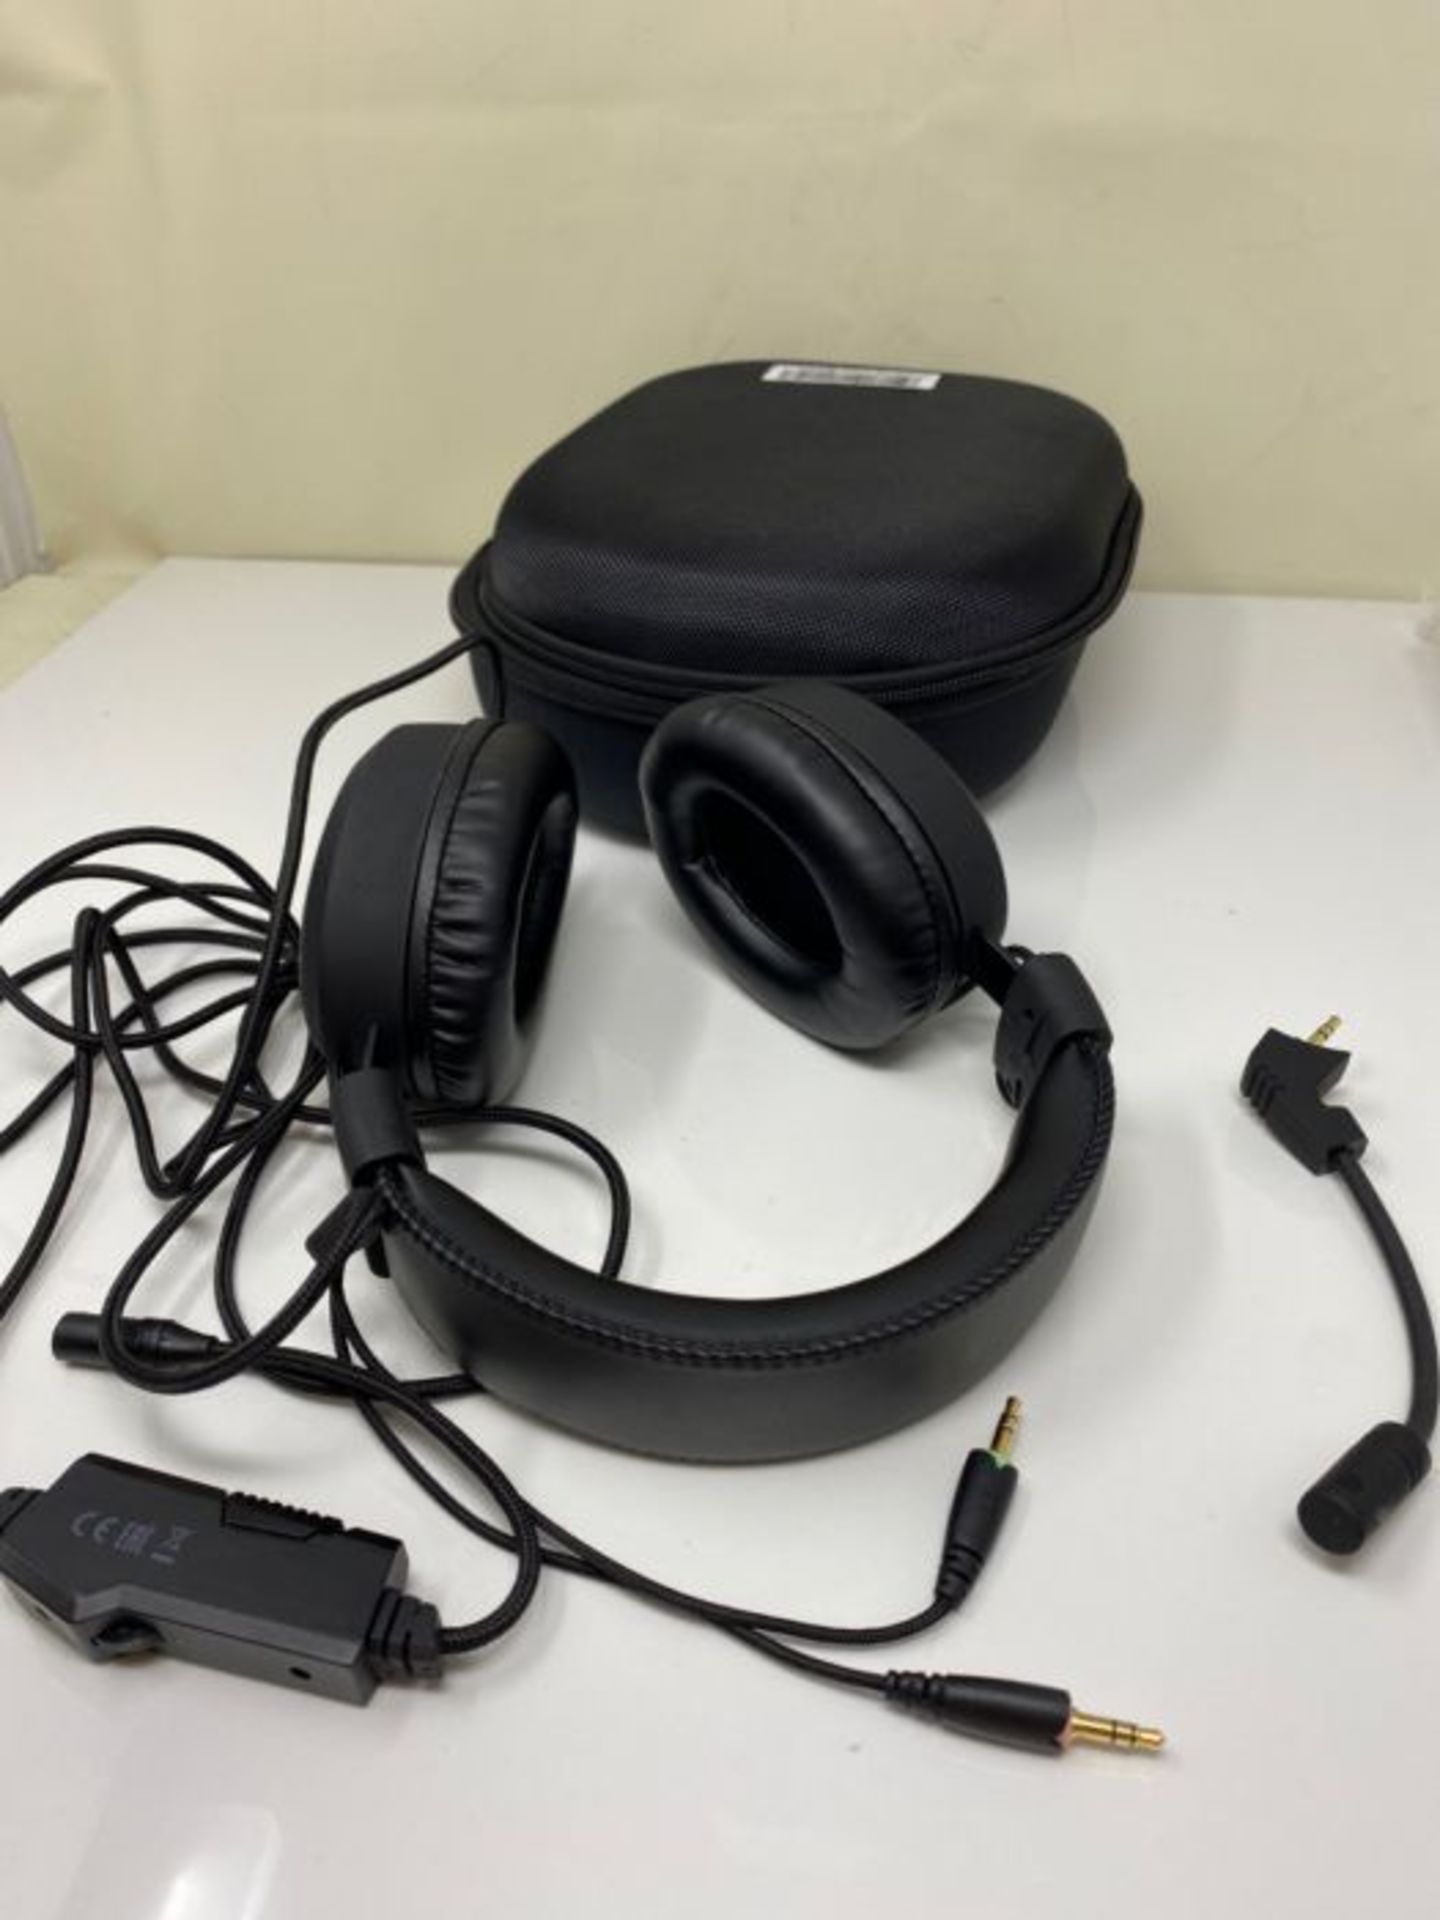 Sharkoon B1 Stereo Gaming Headphones - Black - Image 2 of 2